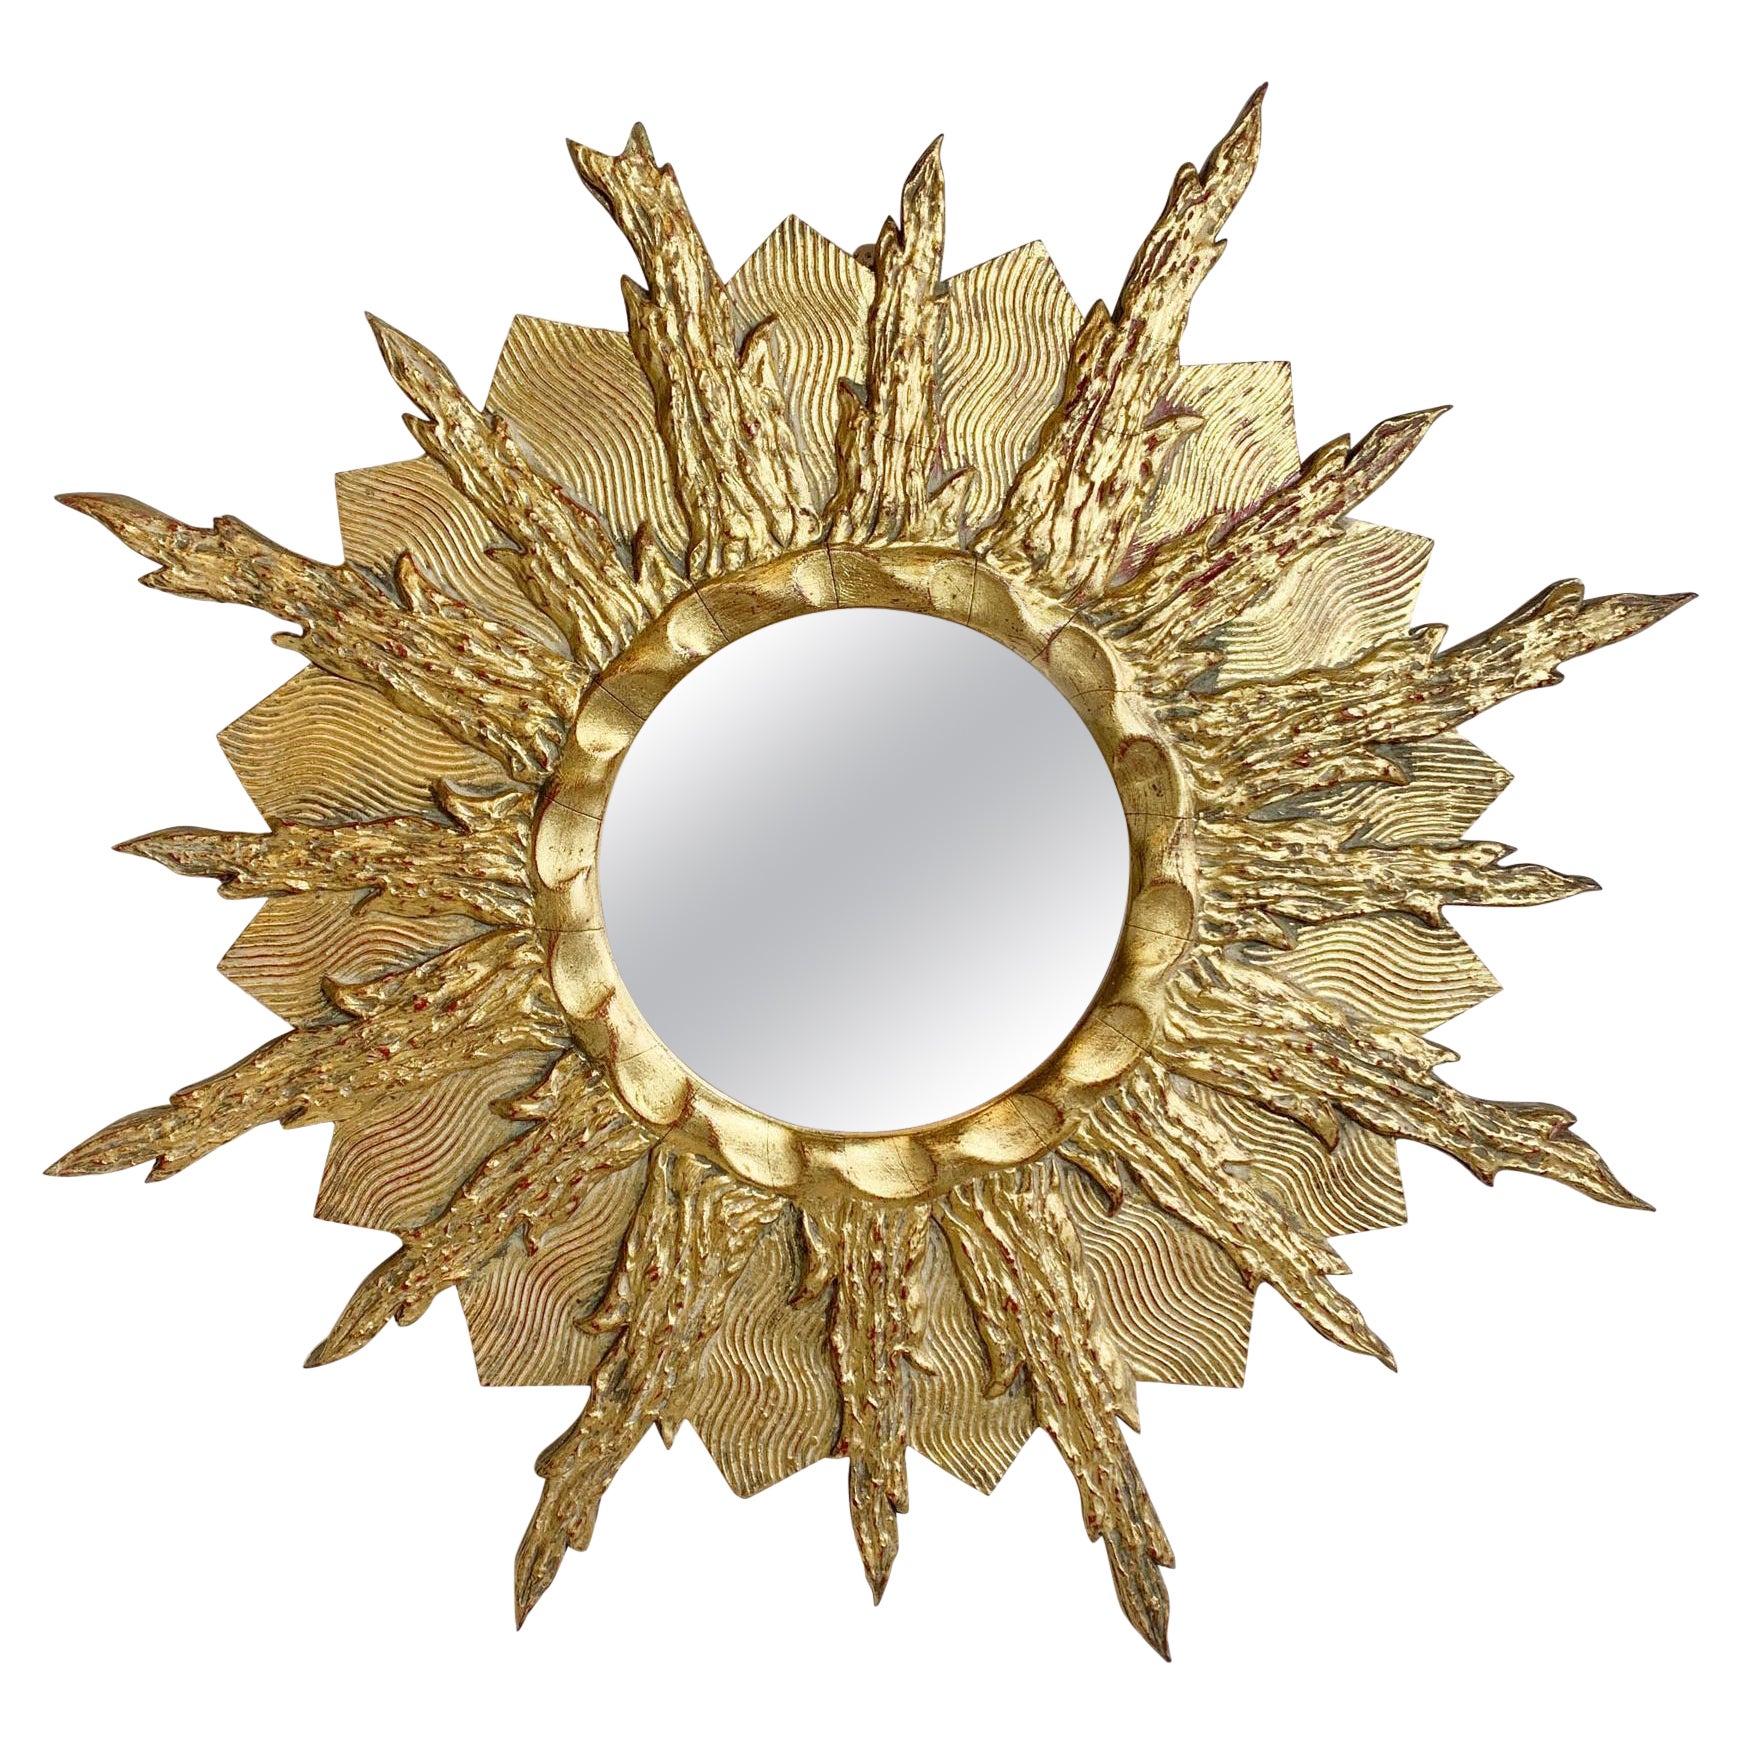 Gold Sunburst Mirror, France, 1960's